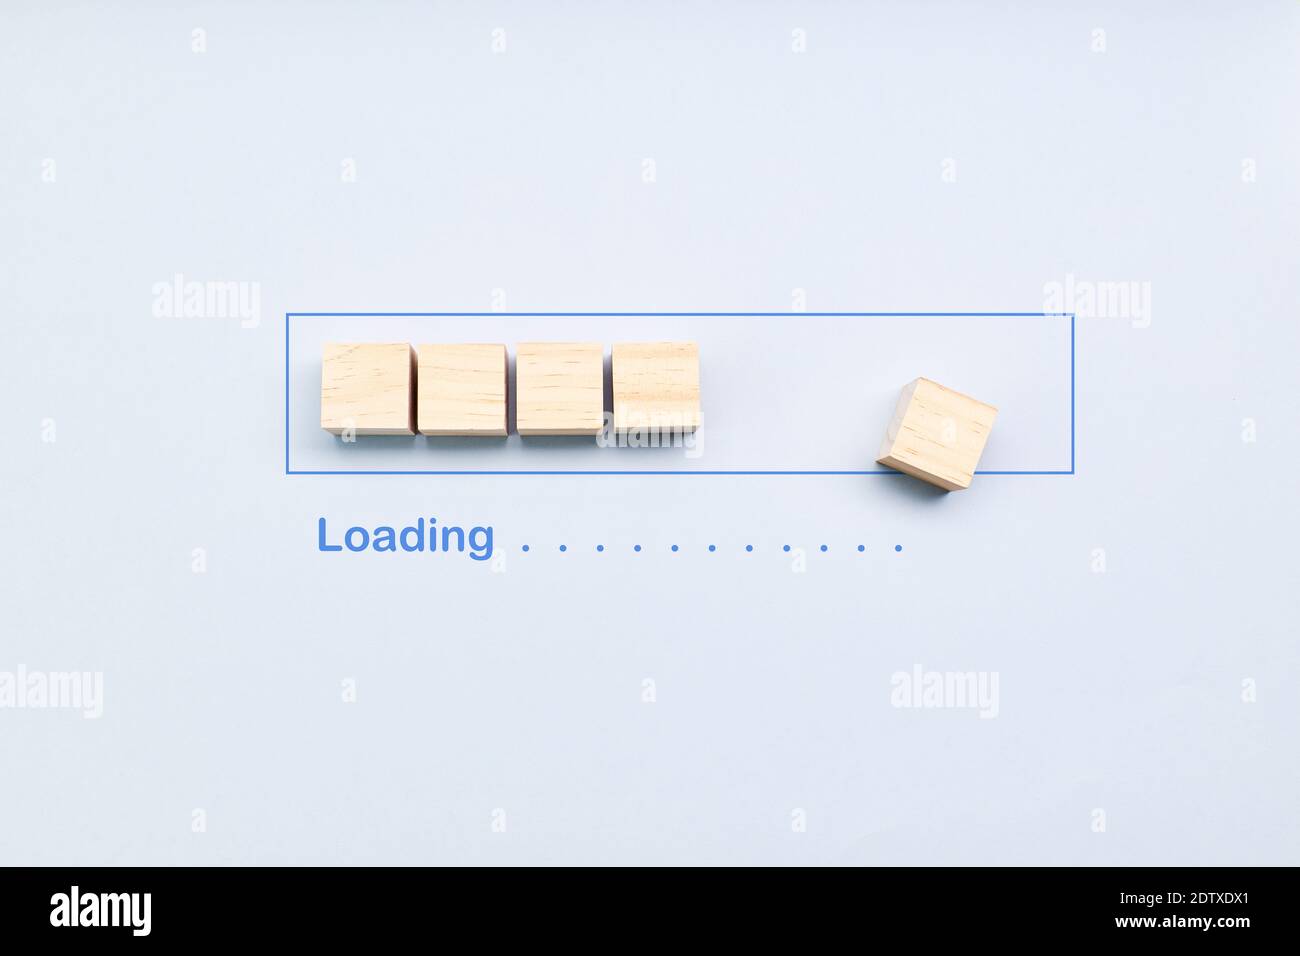 Loading, placing wood cube in progress bar. Download progress. Loading status Stock Photo